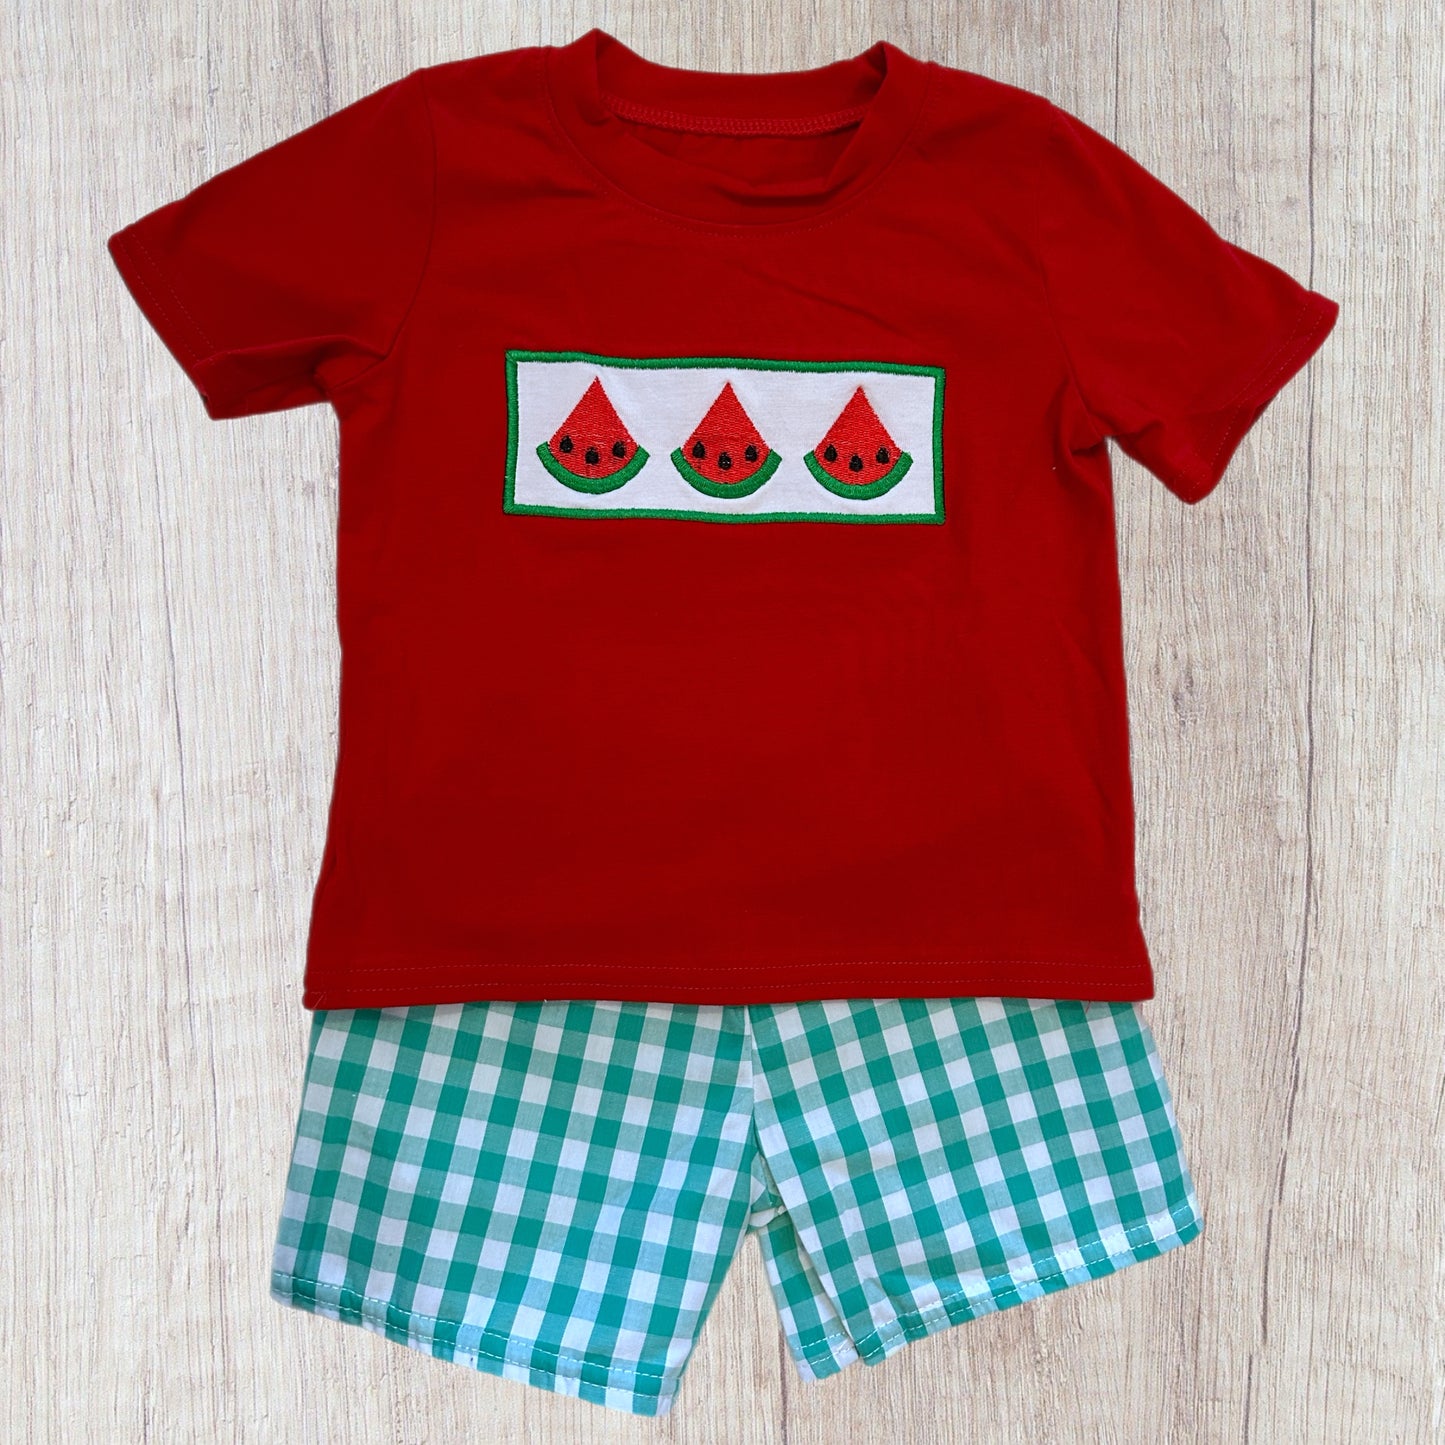 Boy Watermelon Slice Short Set (RTS)